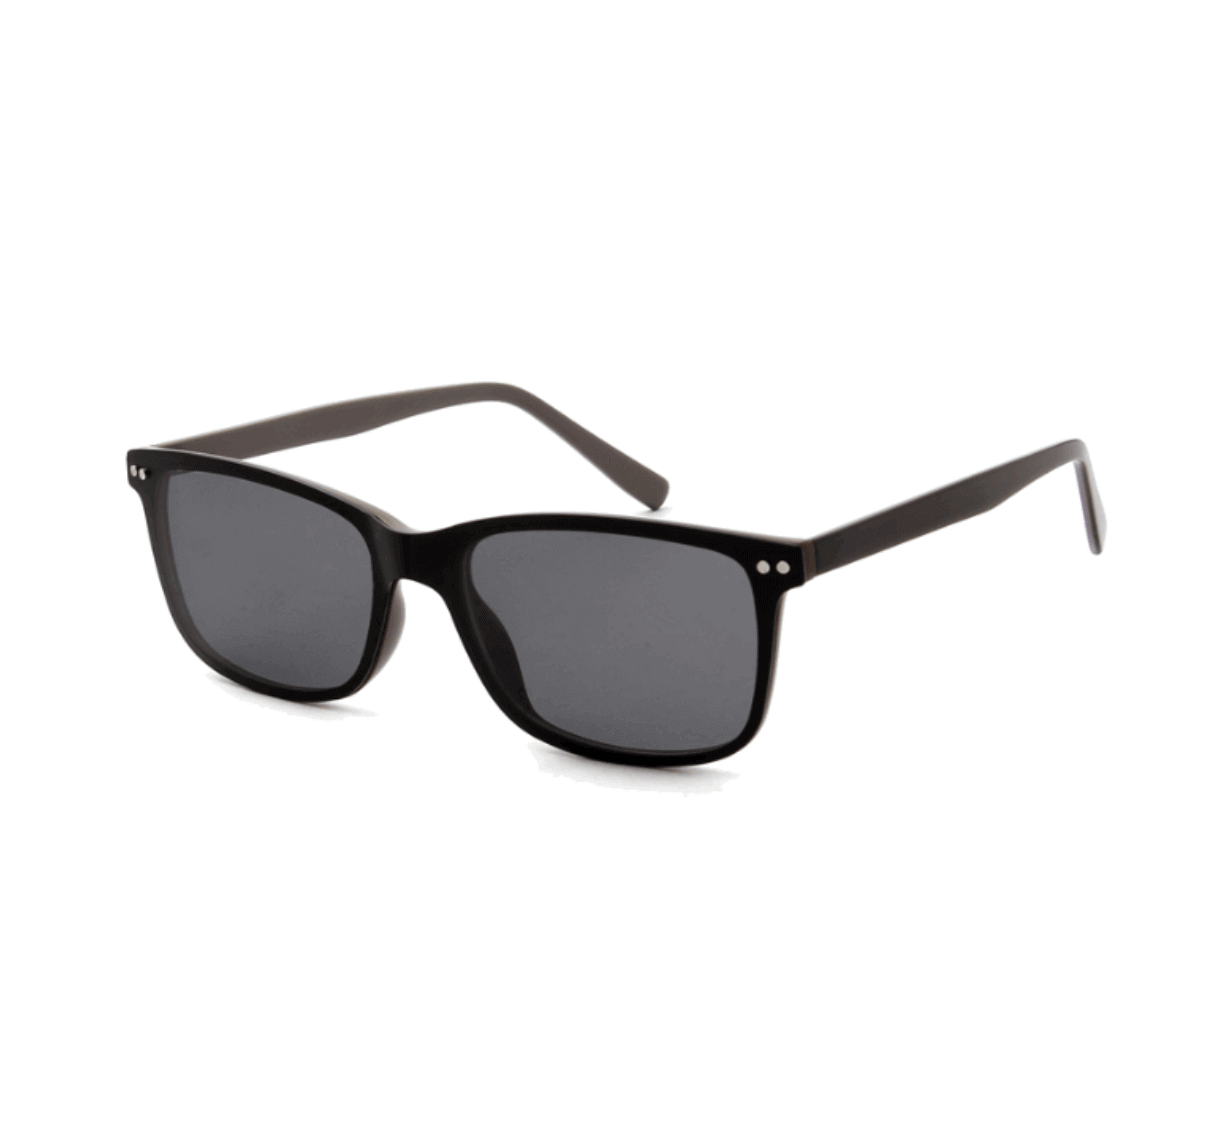 wholesale designer glasses, wholesale plastic sunglasses, plastic sunglasses in bulk, polarized sunglasses suppliers, cheap designer sunglasses China